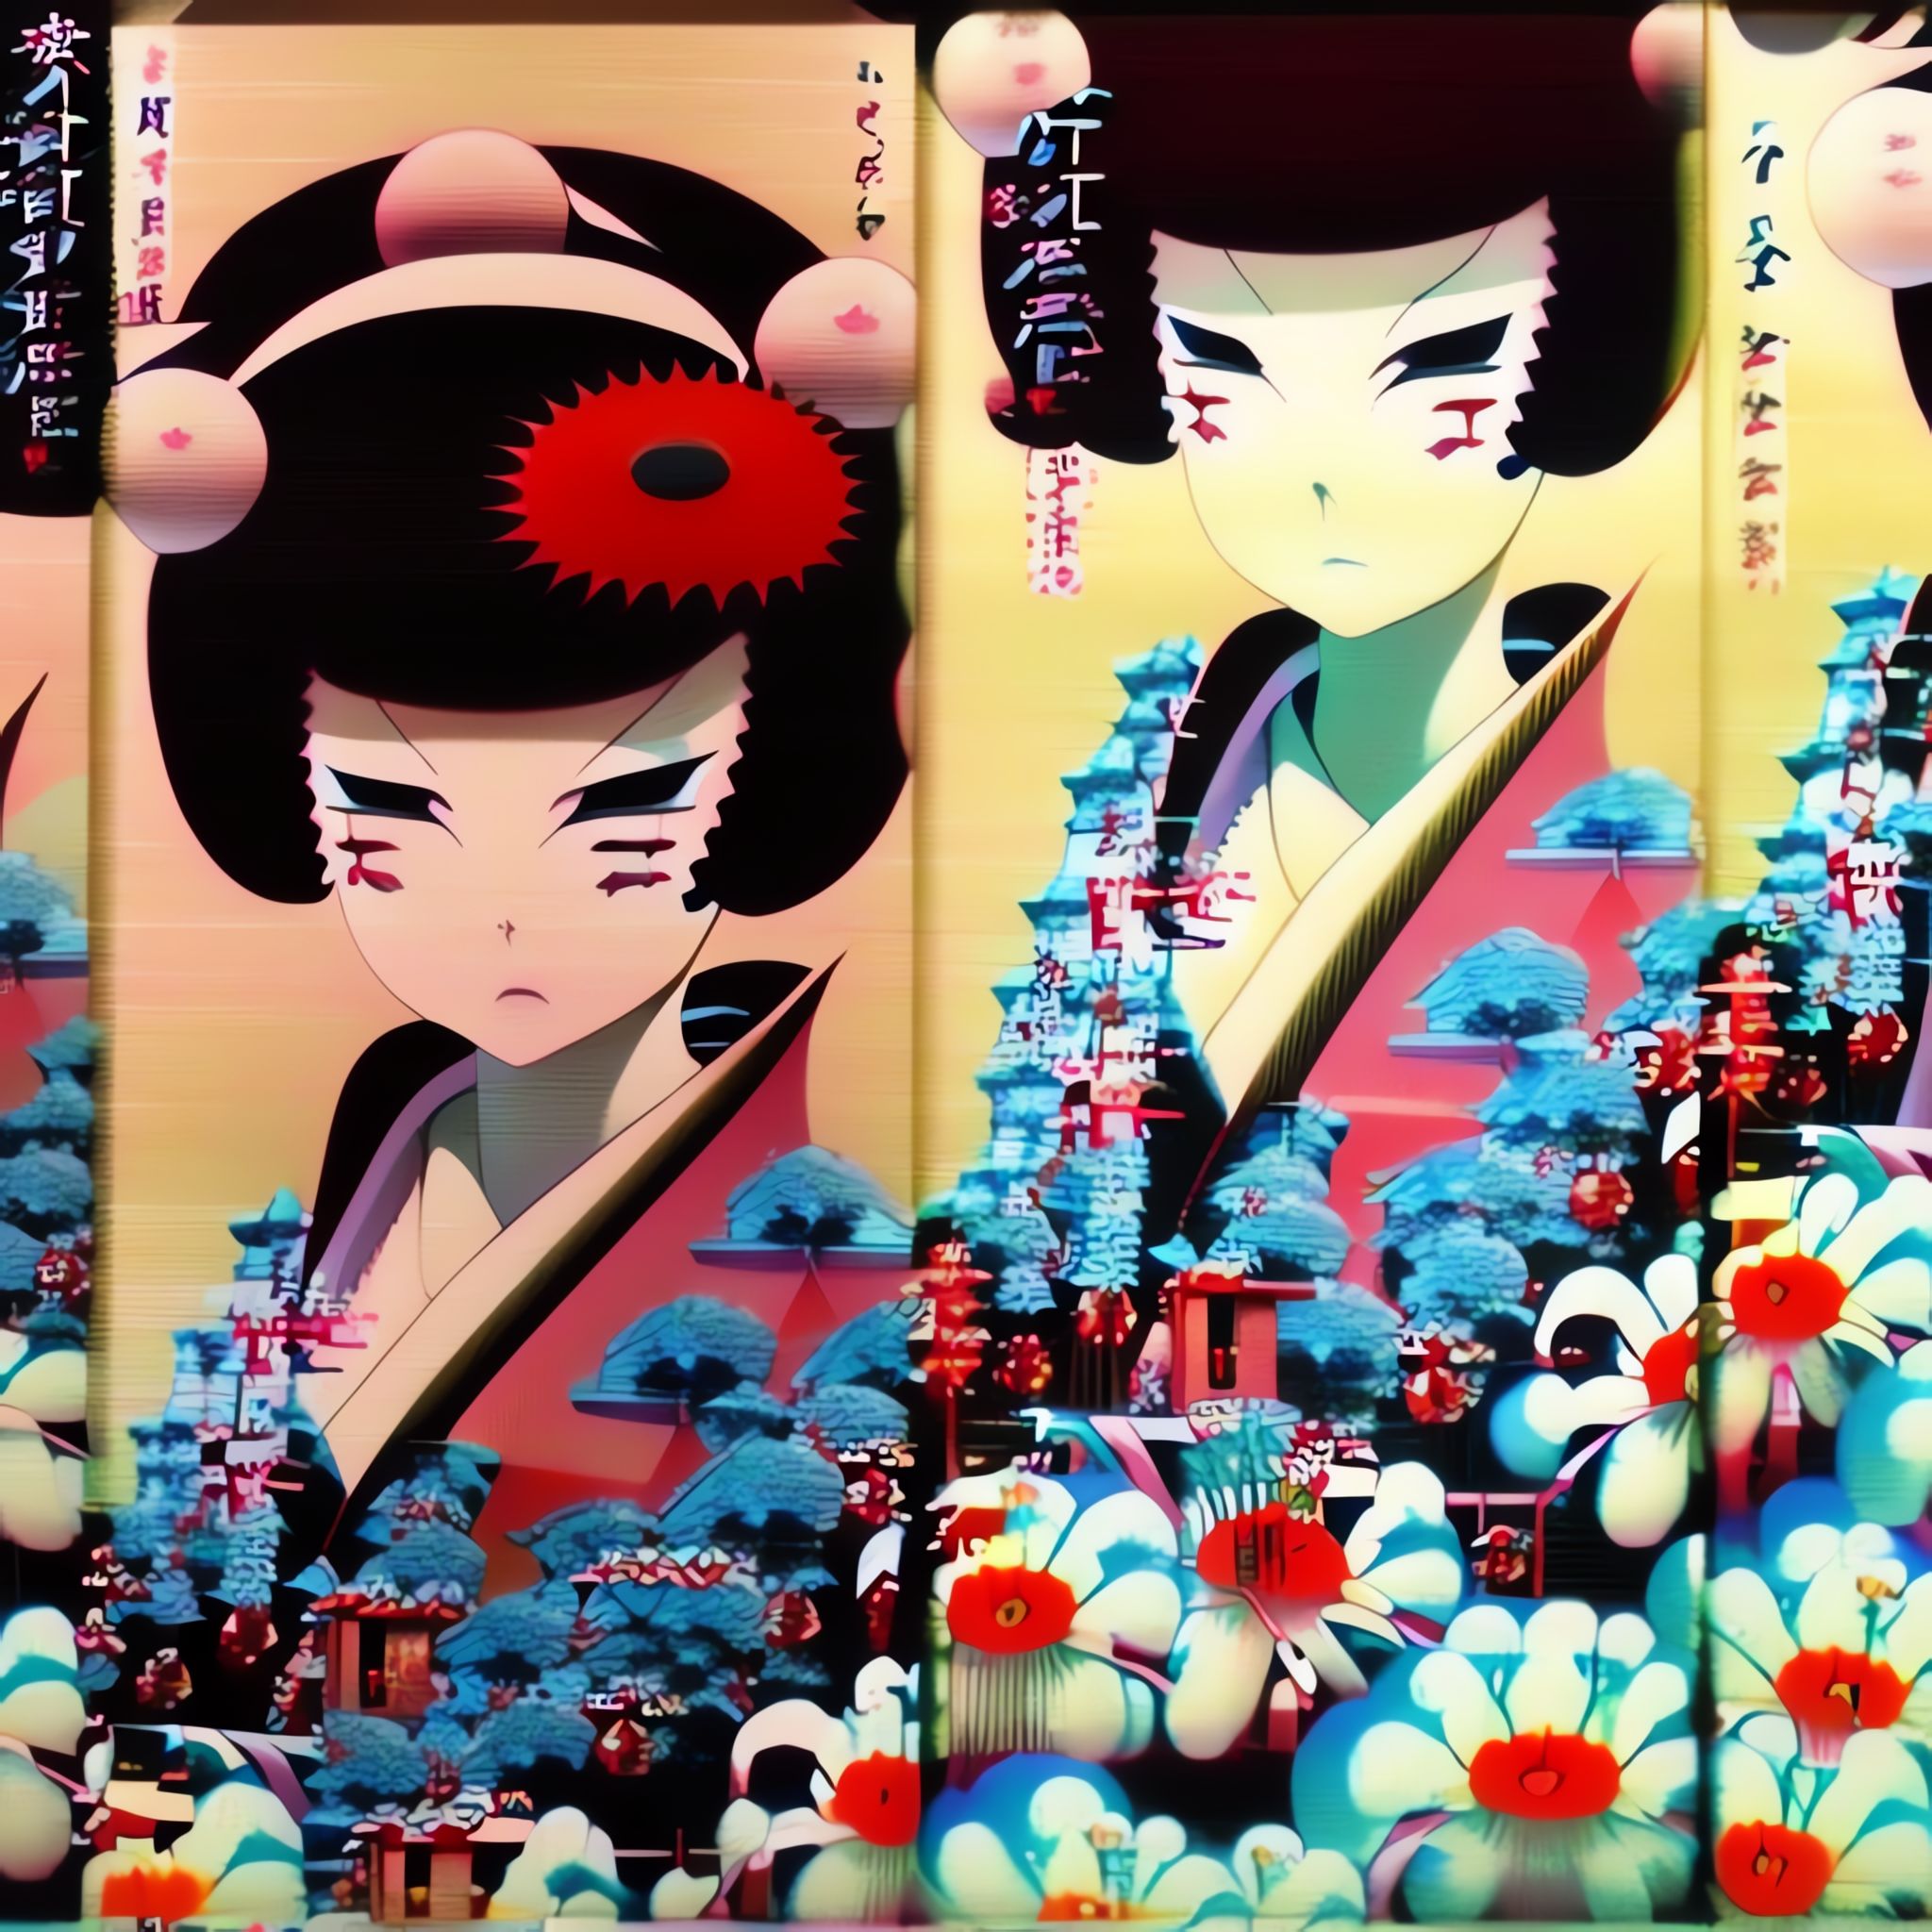 Geisha-in-the-middle-of-the-frame-Neo-Tokyo-lots-of-details-Shusei-Nagaoko-i1o0